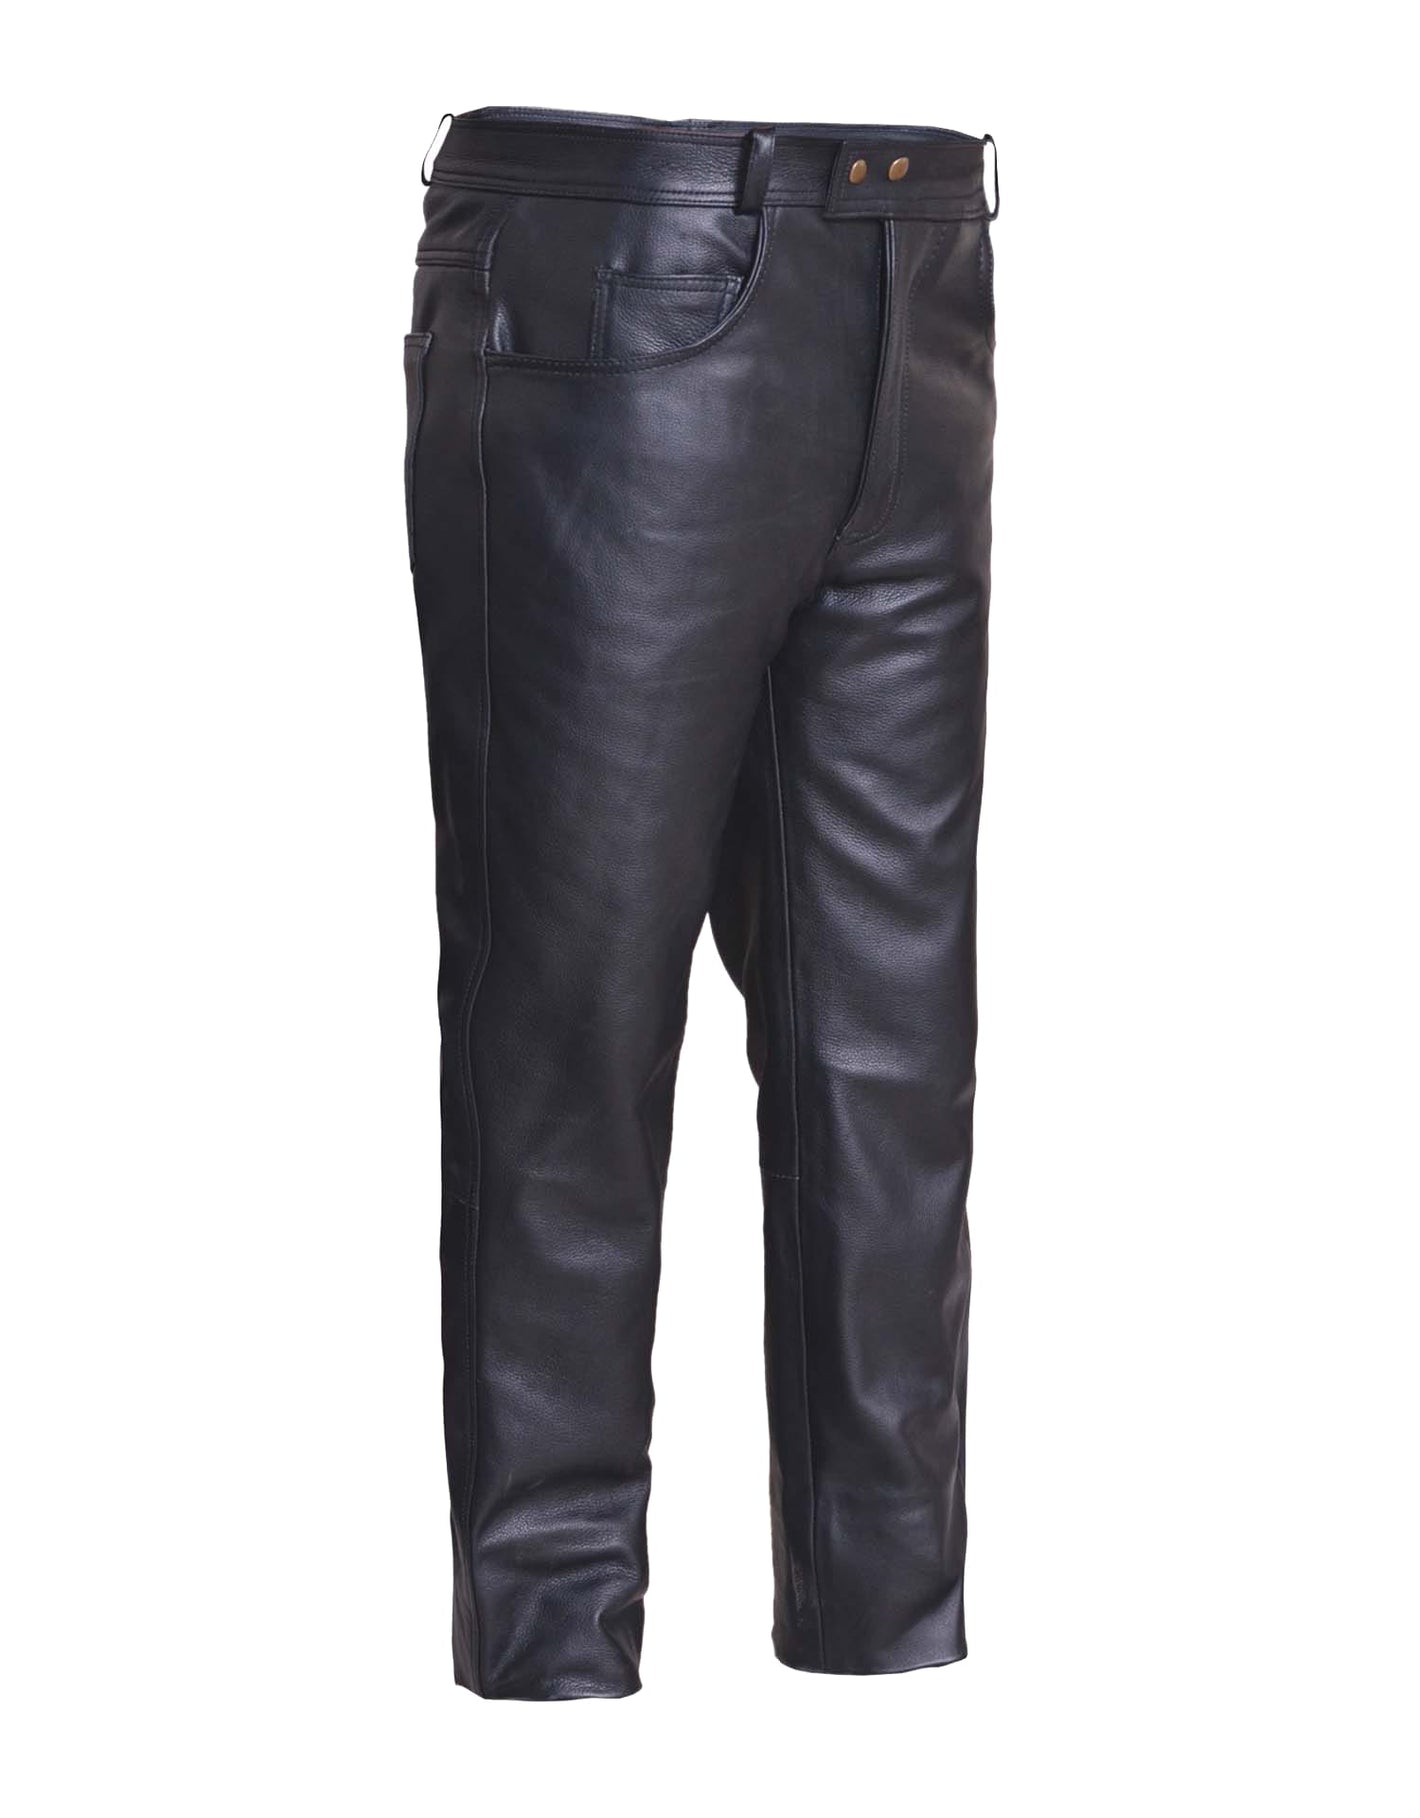 Men's Premium Leather Pants